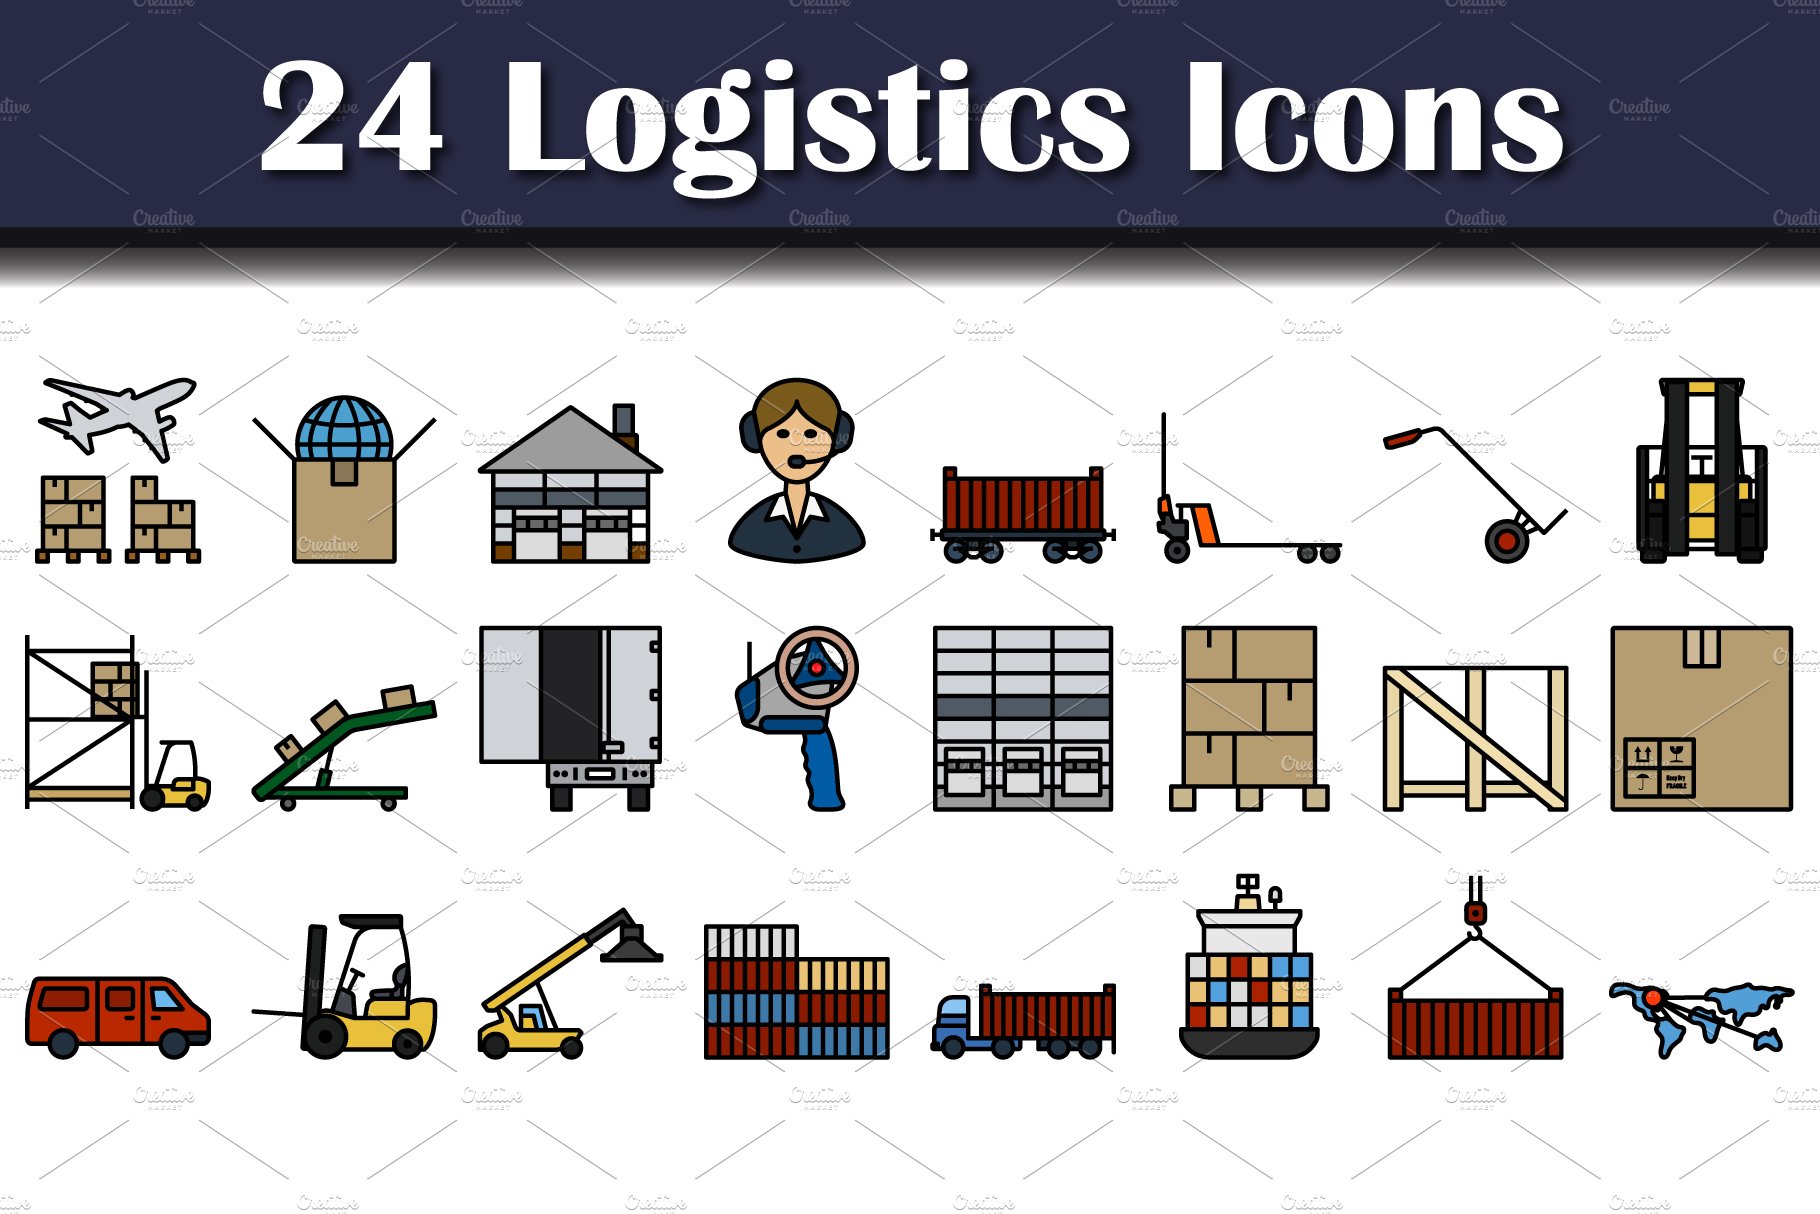 Logistics Icon Set cover image.